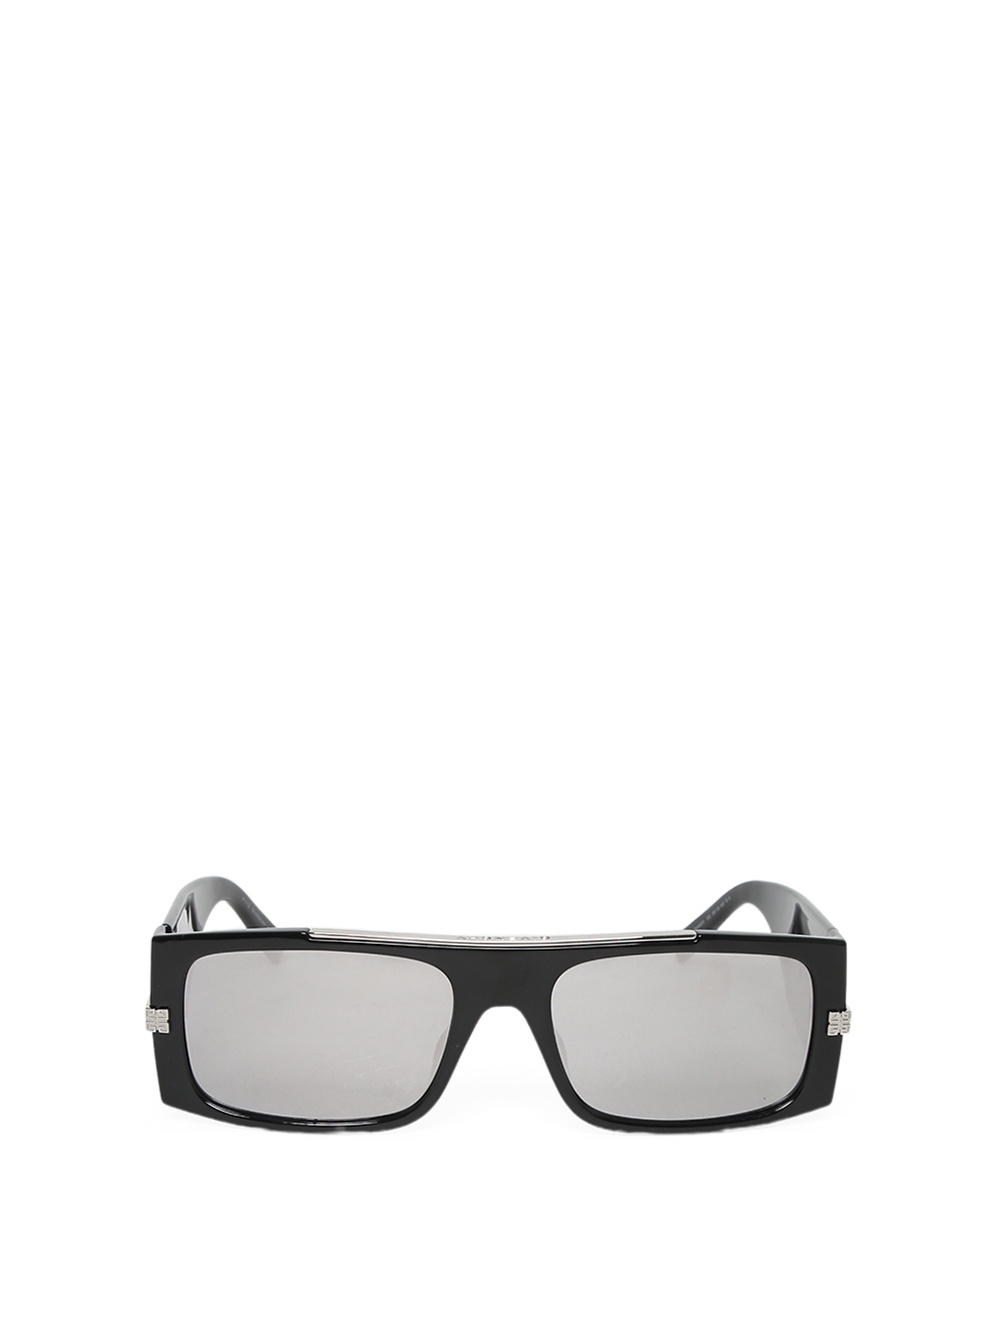 Hinge Sunglasses Shiny Black And Smoke Mirror - 2